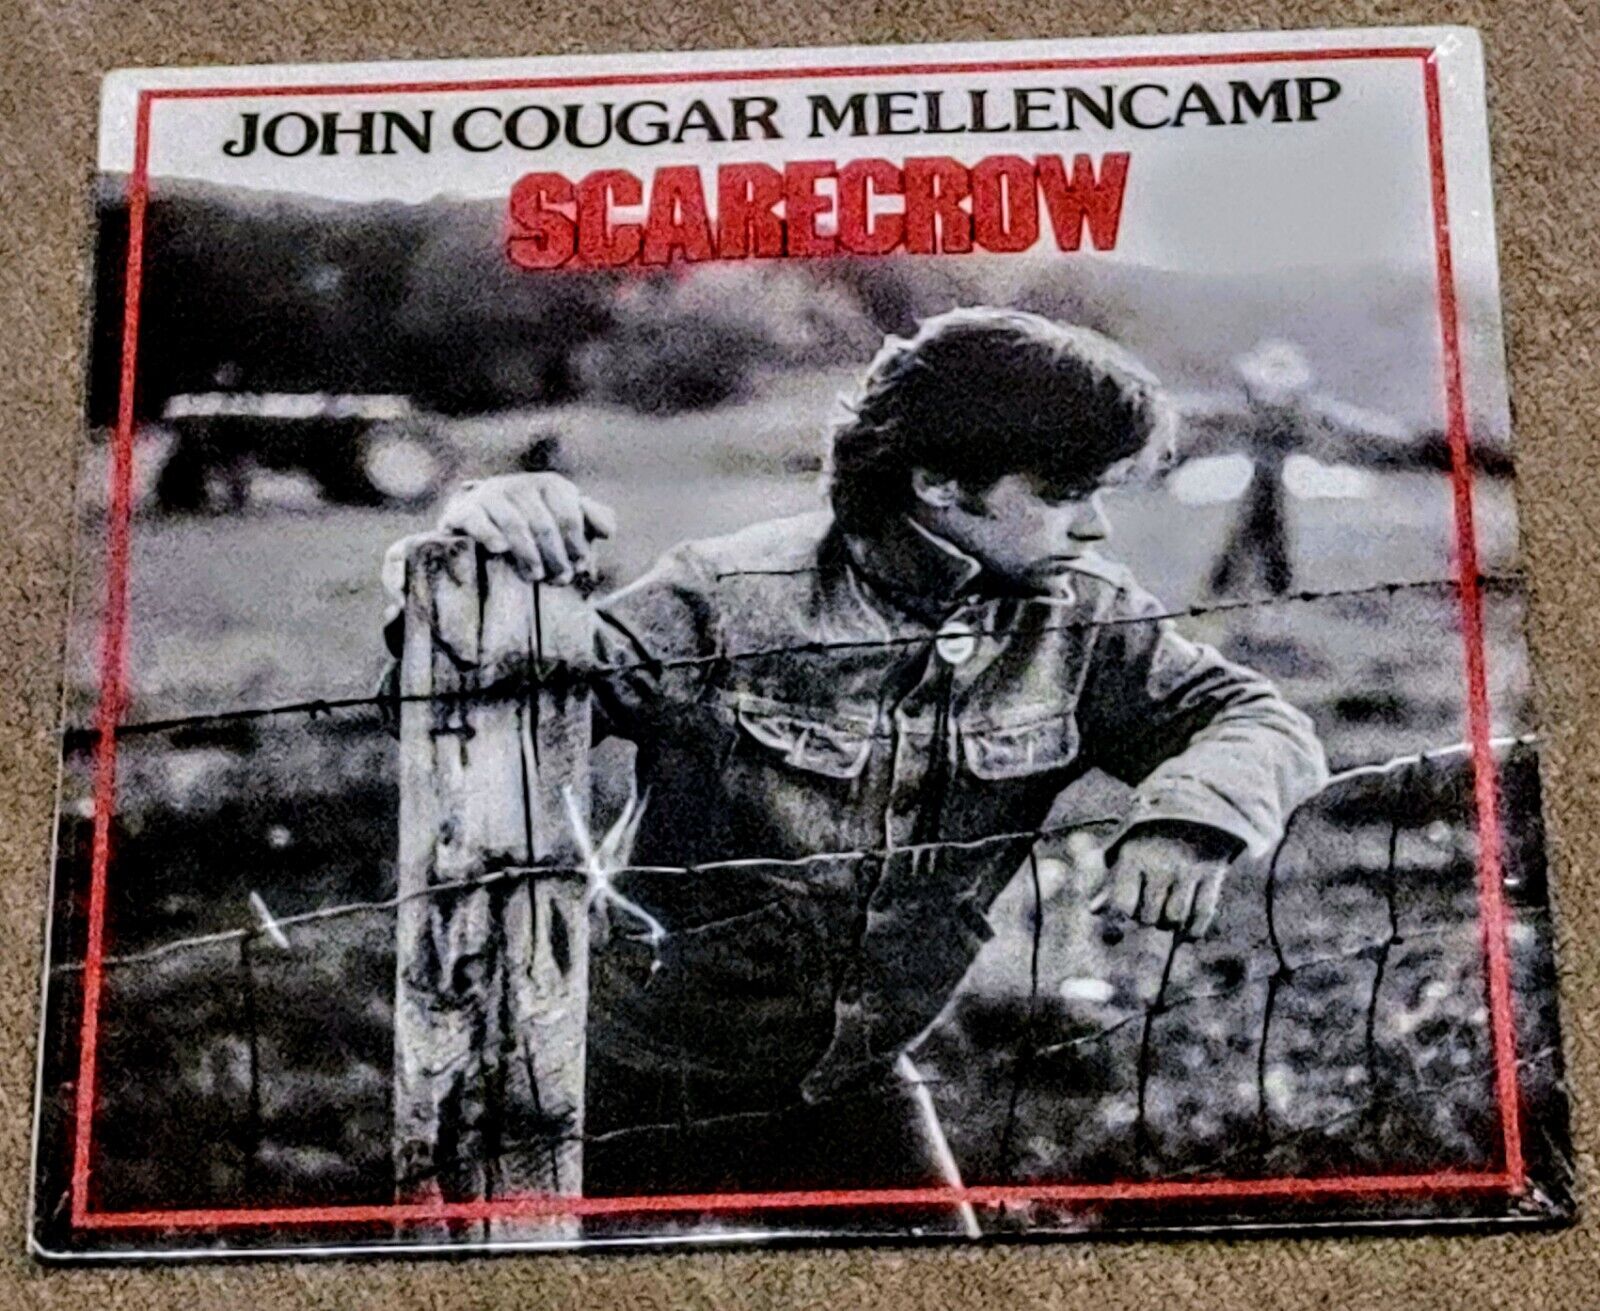 John Cougar Mellencamp Scarecrow New/Seales LP original 1985 press